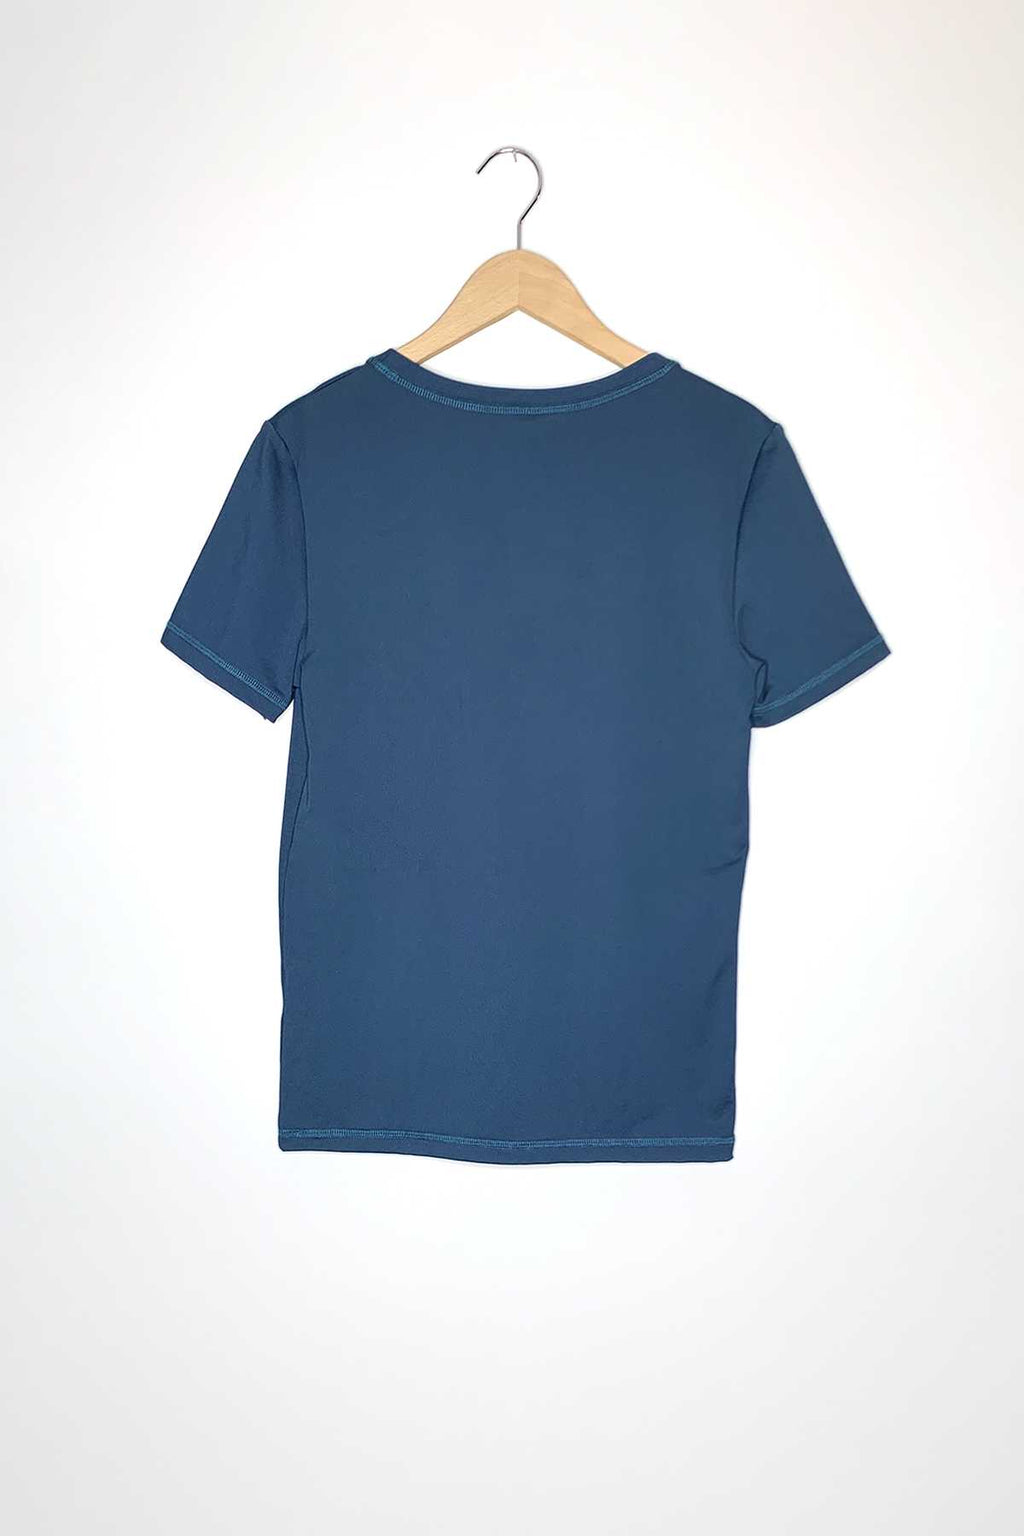 #346 - Camiseta termolactil para hombre YUJ X DAMART // Talla S YUJ - House of Mindfulness